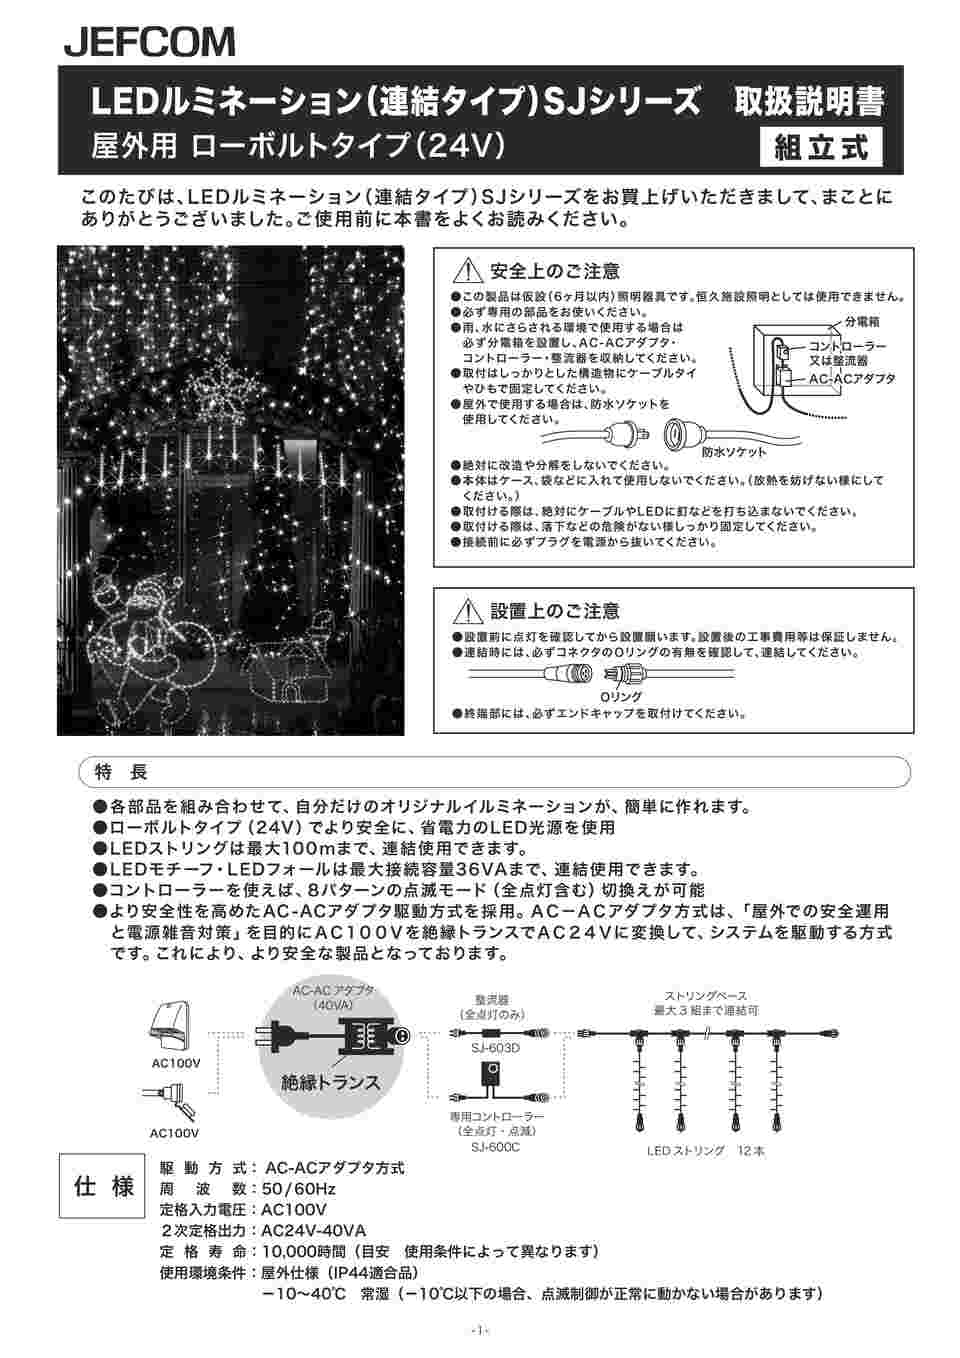 61-8552-10 LEDストリング(SJシリーズ) SJ-E05-30WW 【AXEL】 アズワン